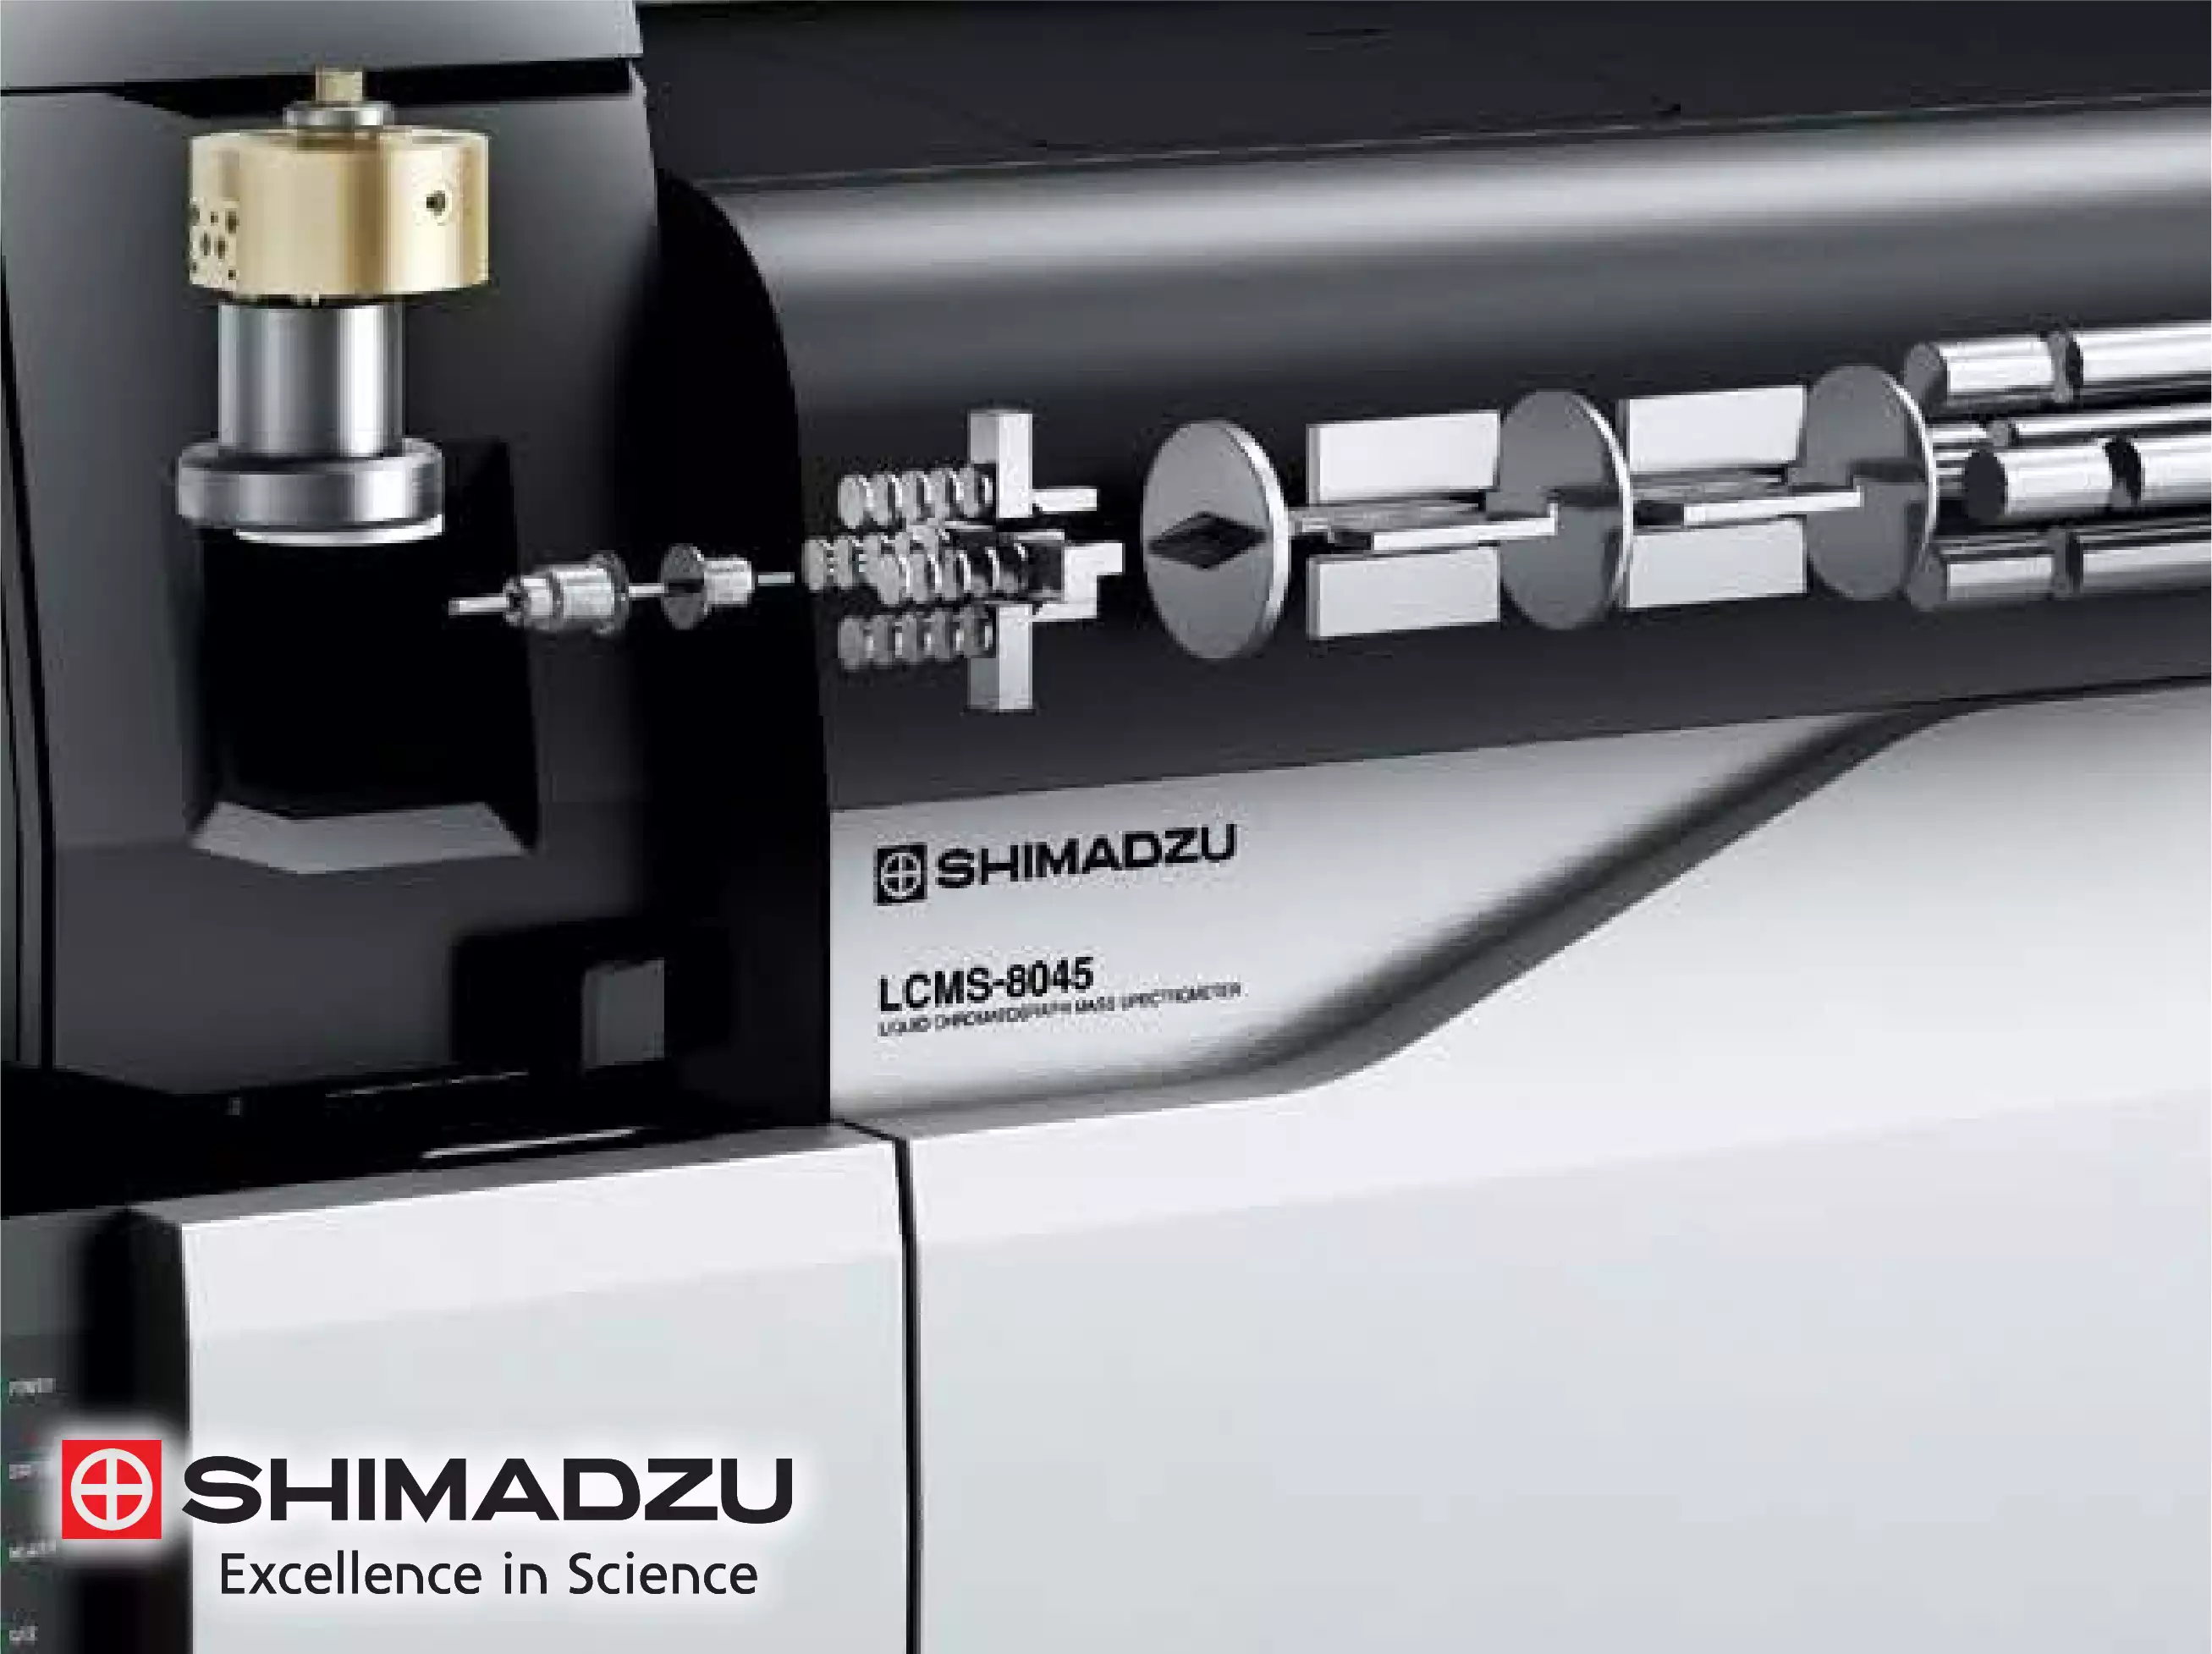 Shimadzu LCMS-8045 Triple Quadrupole LC-MS/MS